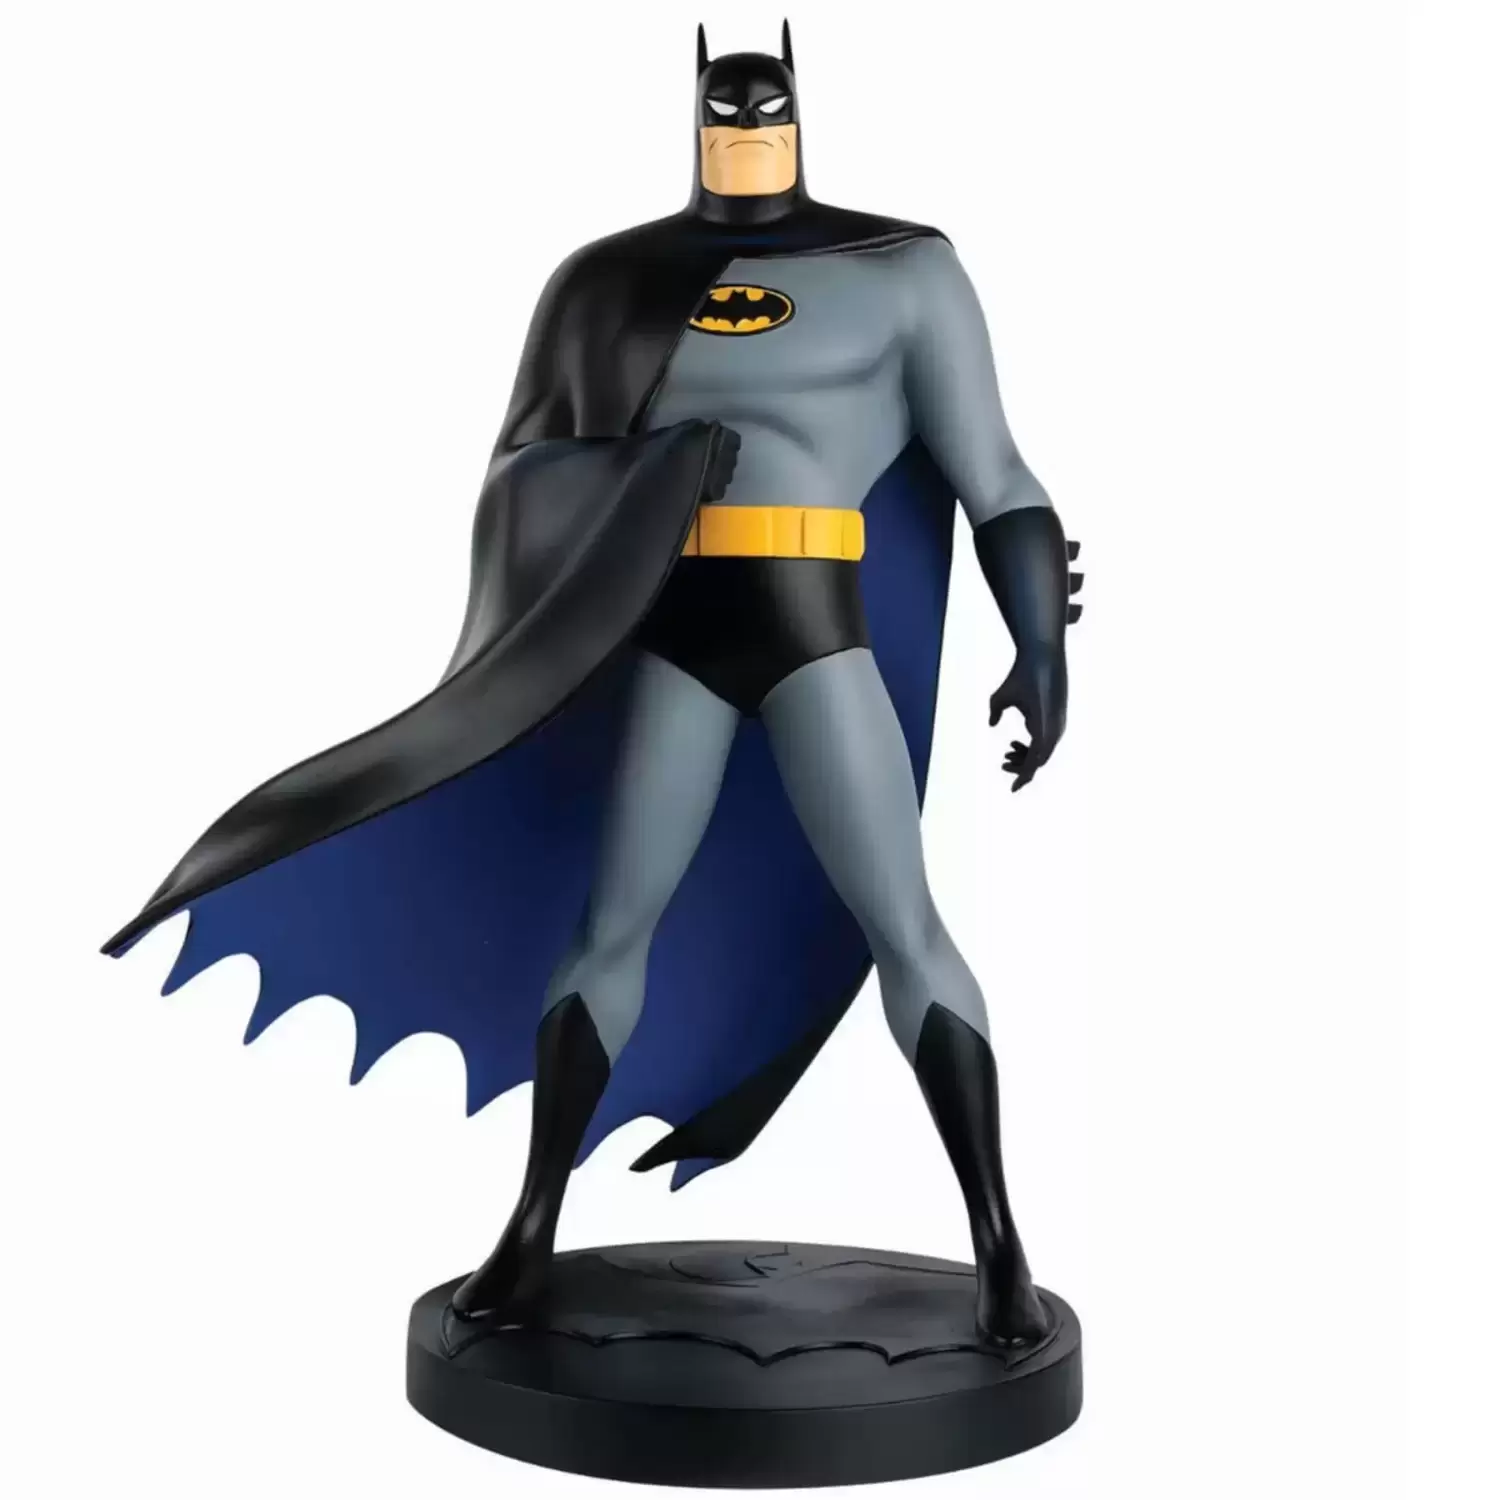 Batman Animated - Mega - Eaglemoss / Hero Collector Special Edition action  figure